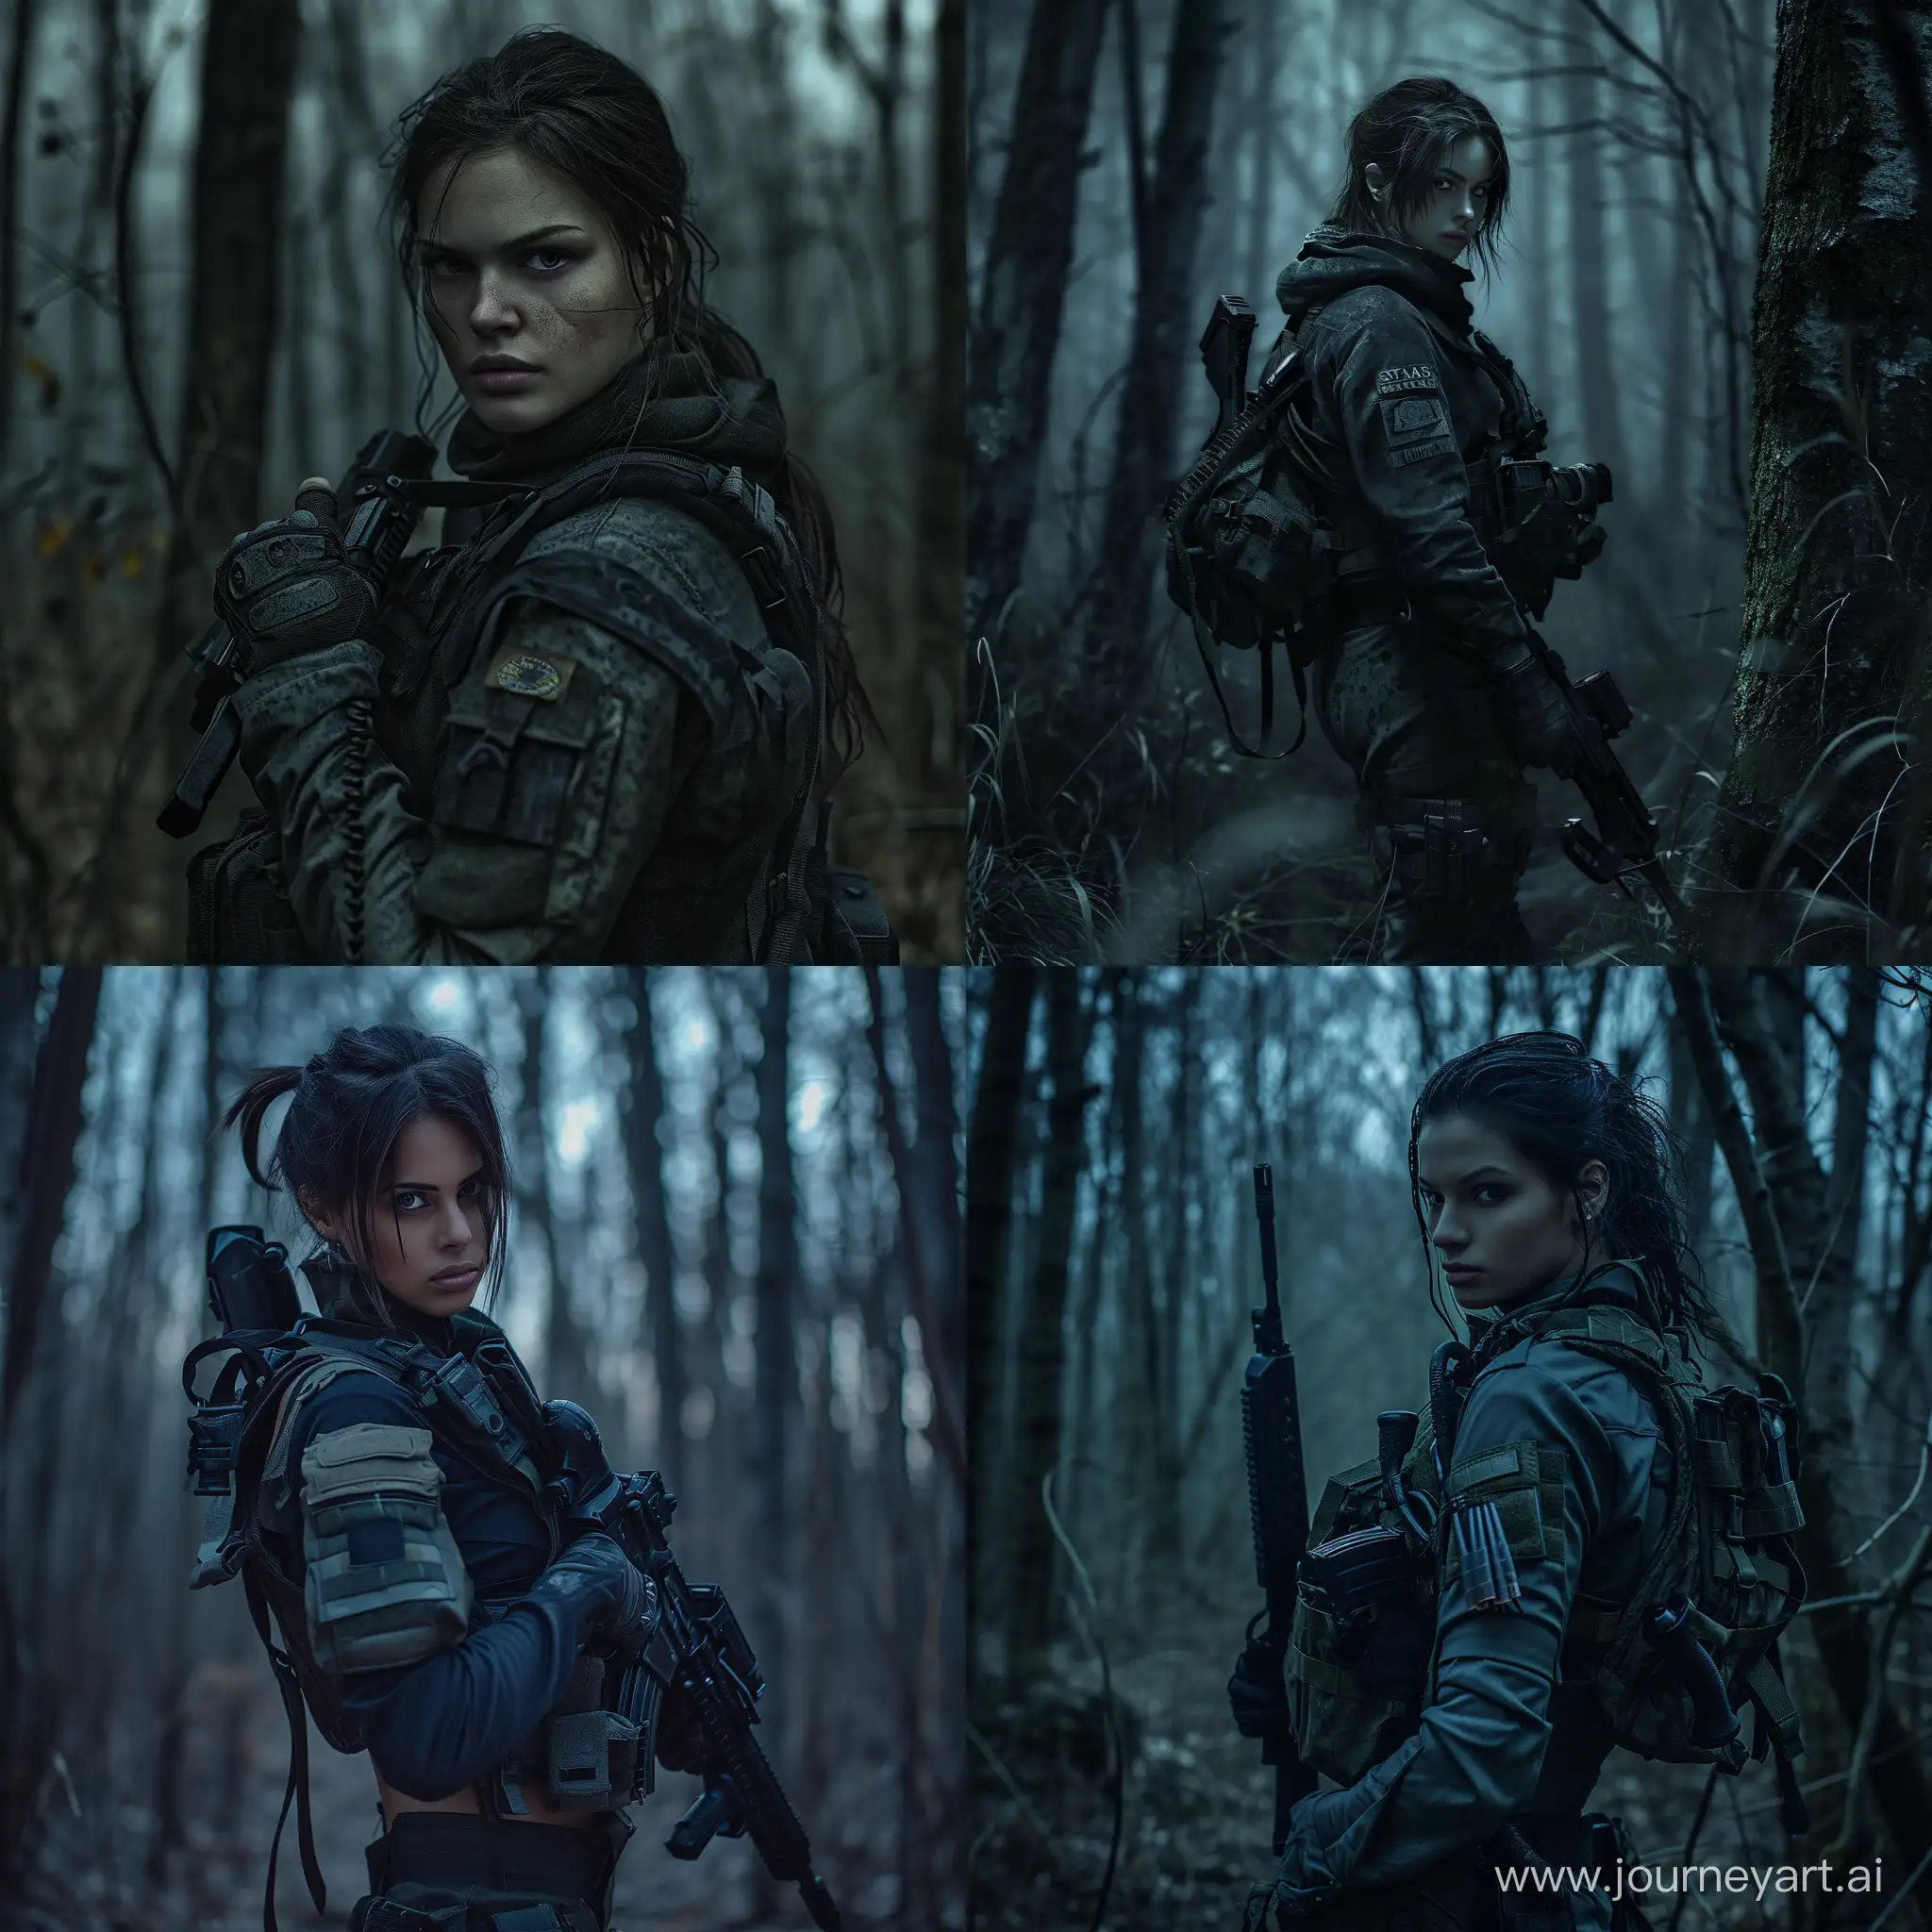 beautiful Sheva Alomar from Resident Evil 5 in S.T.A.L.K.E.R as mercenary in darktactical equipment dead trees dark forest